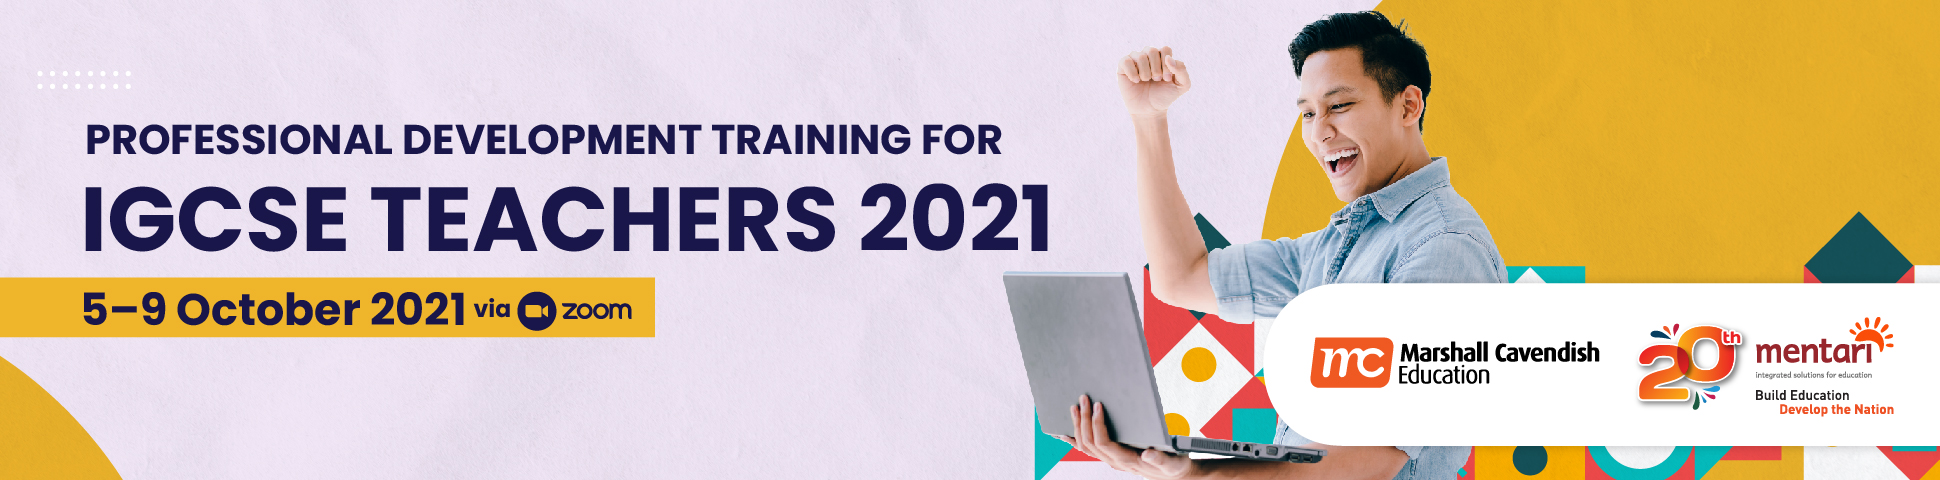 Professional Development Training for IGCSE Teachers 2021